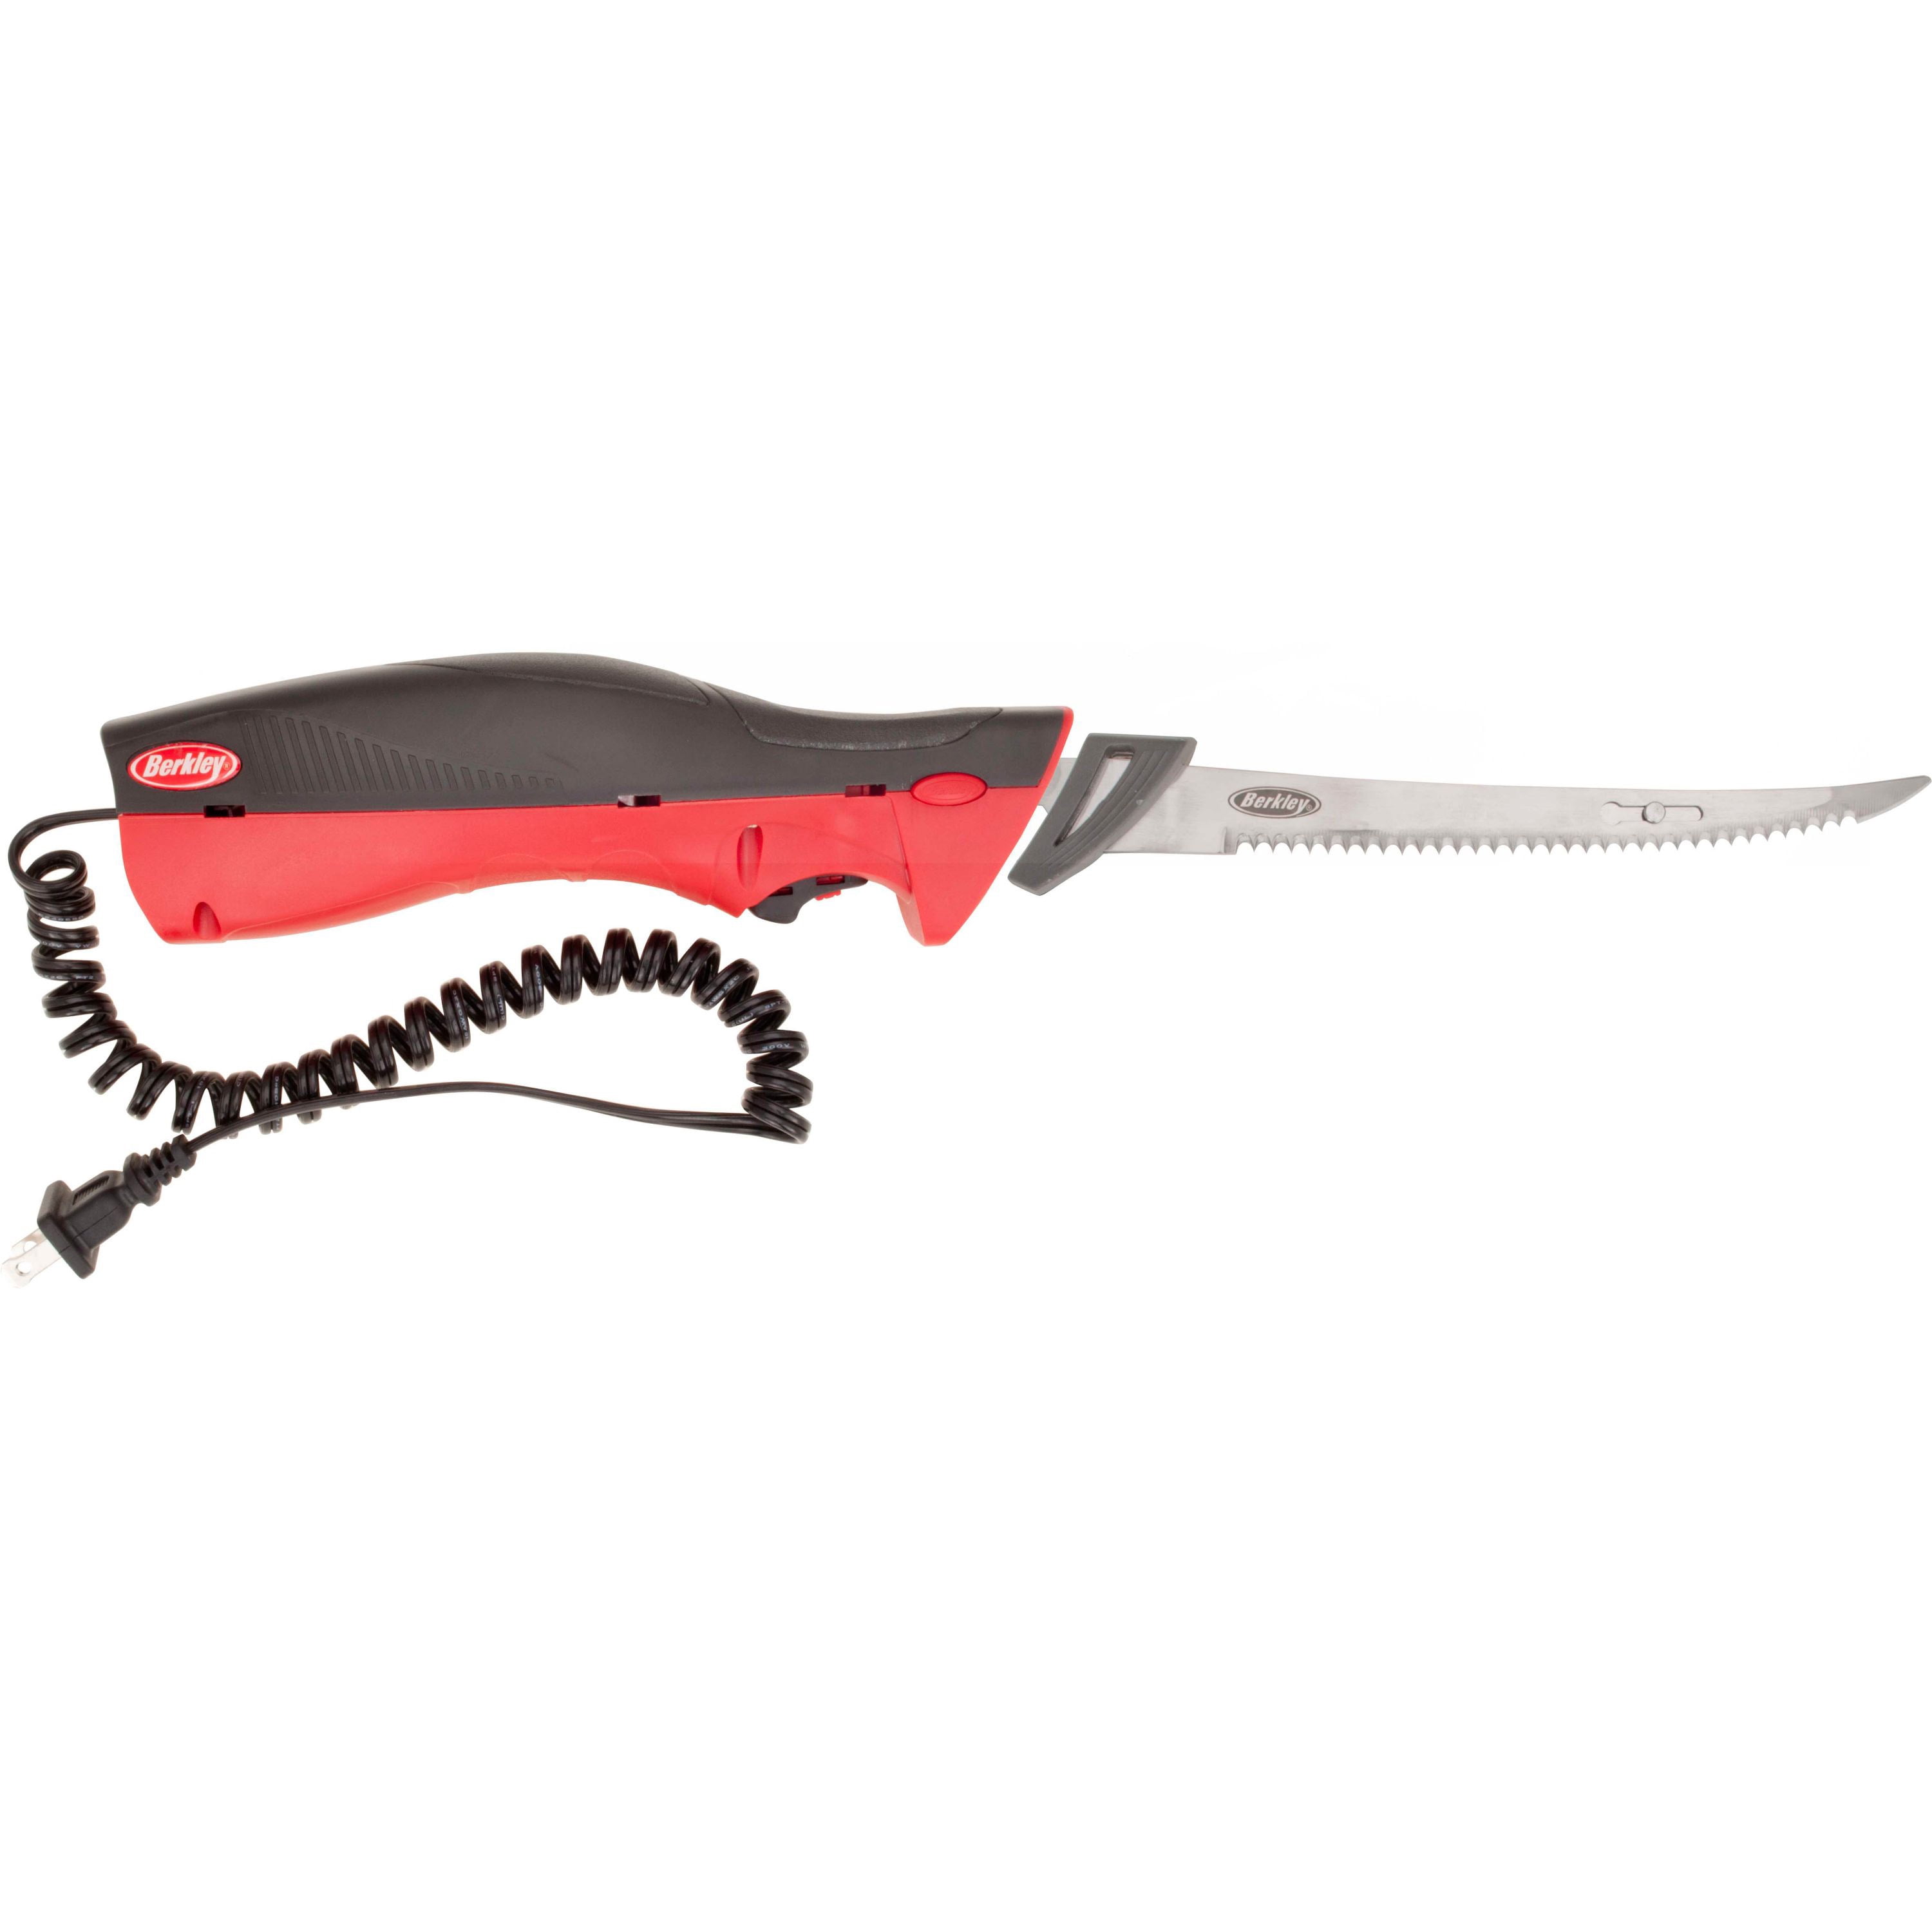 Berkley 1264631 Electric Fillet Fishing Knife 8 Stainless Steel